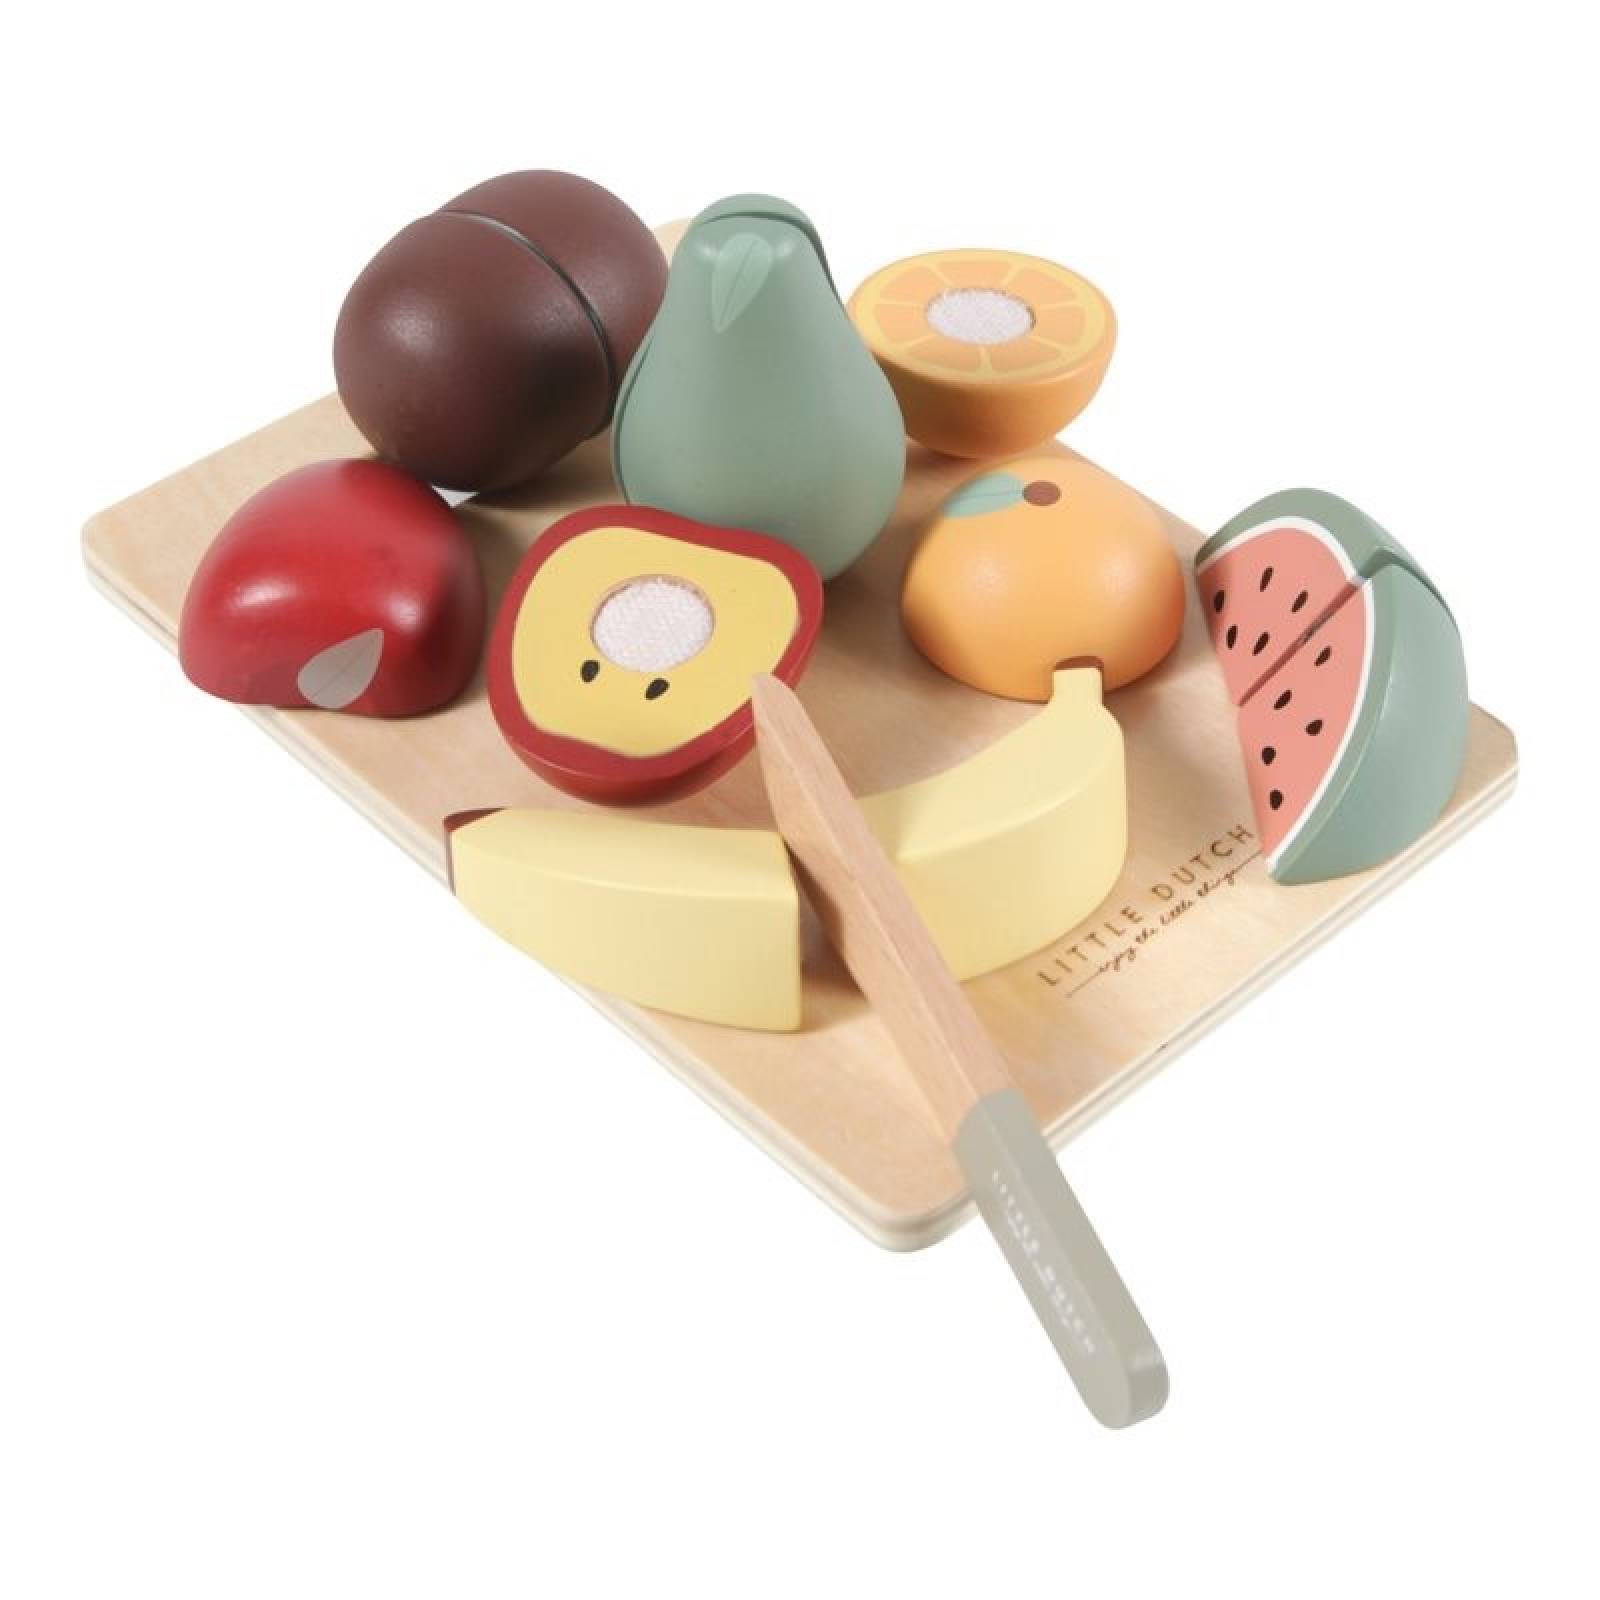 Wooden Cutting Fruit Toy Set By Little Dutch 2+